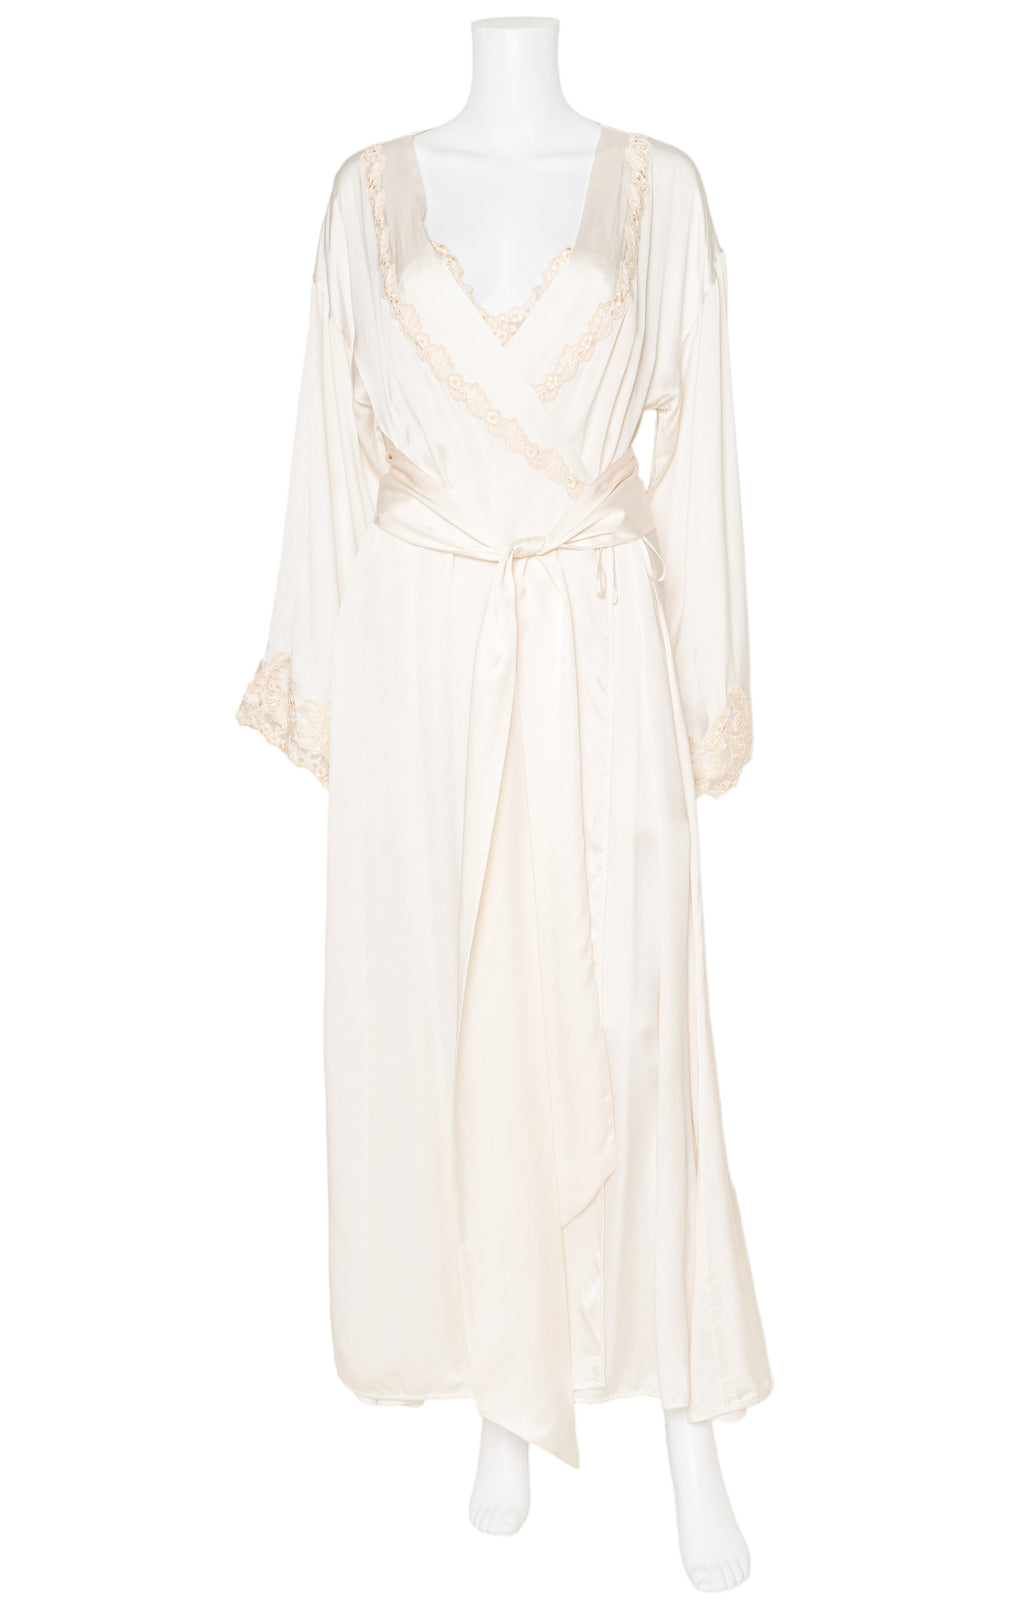 LA PERLA (RARE) Pajama Set Size: Robe - Marked a 2 / Fits like M Dress - Marked a 3 / Fits like L Price $1,995